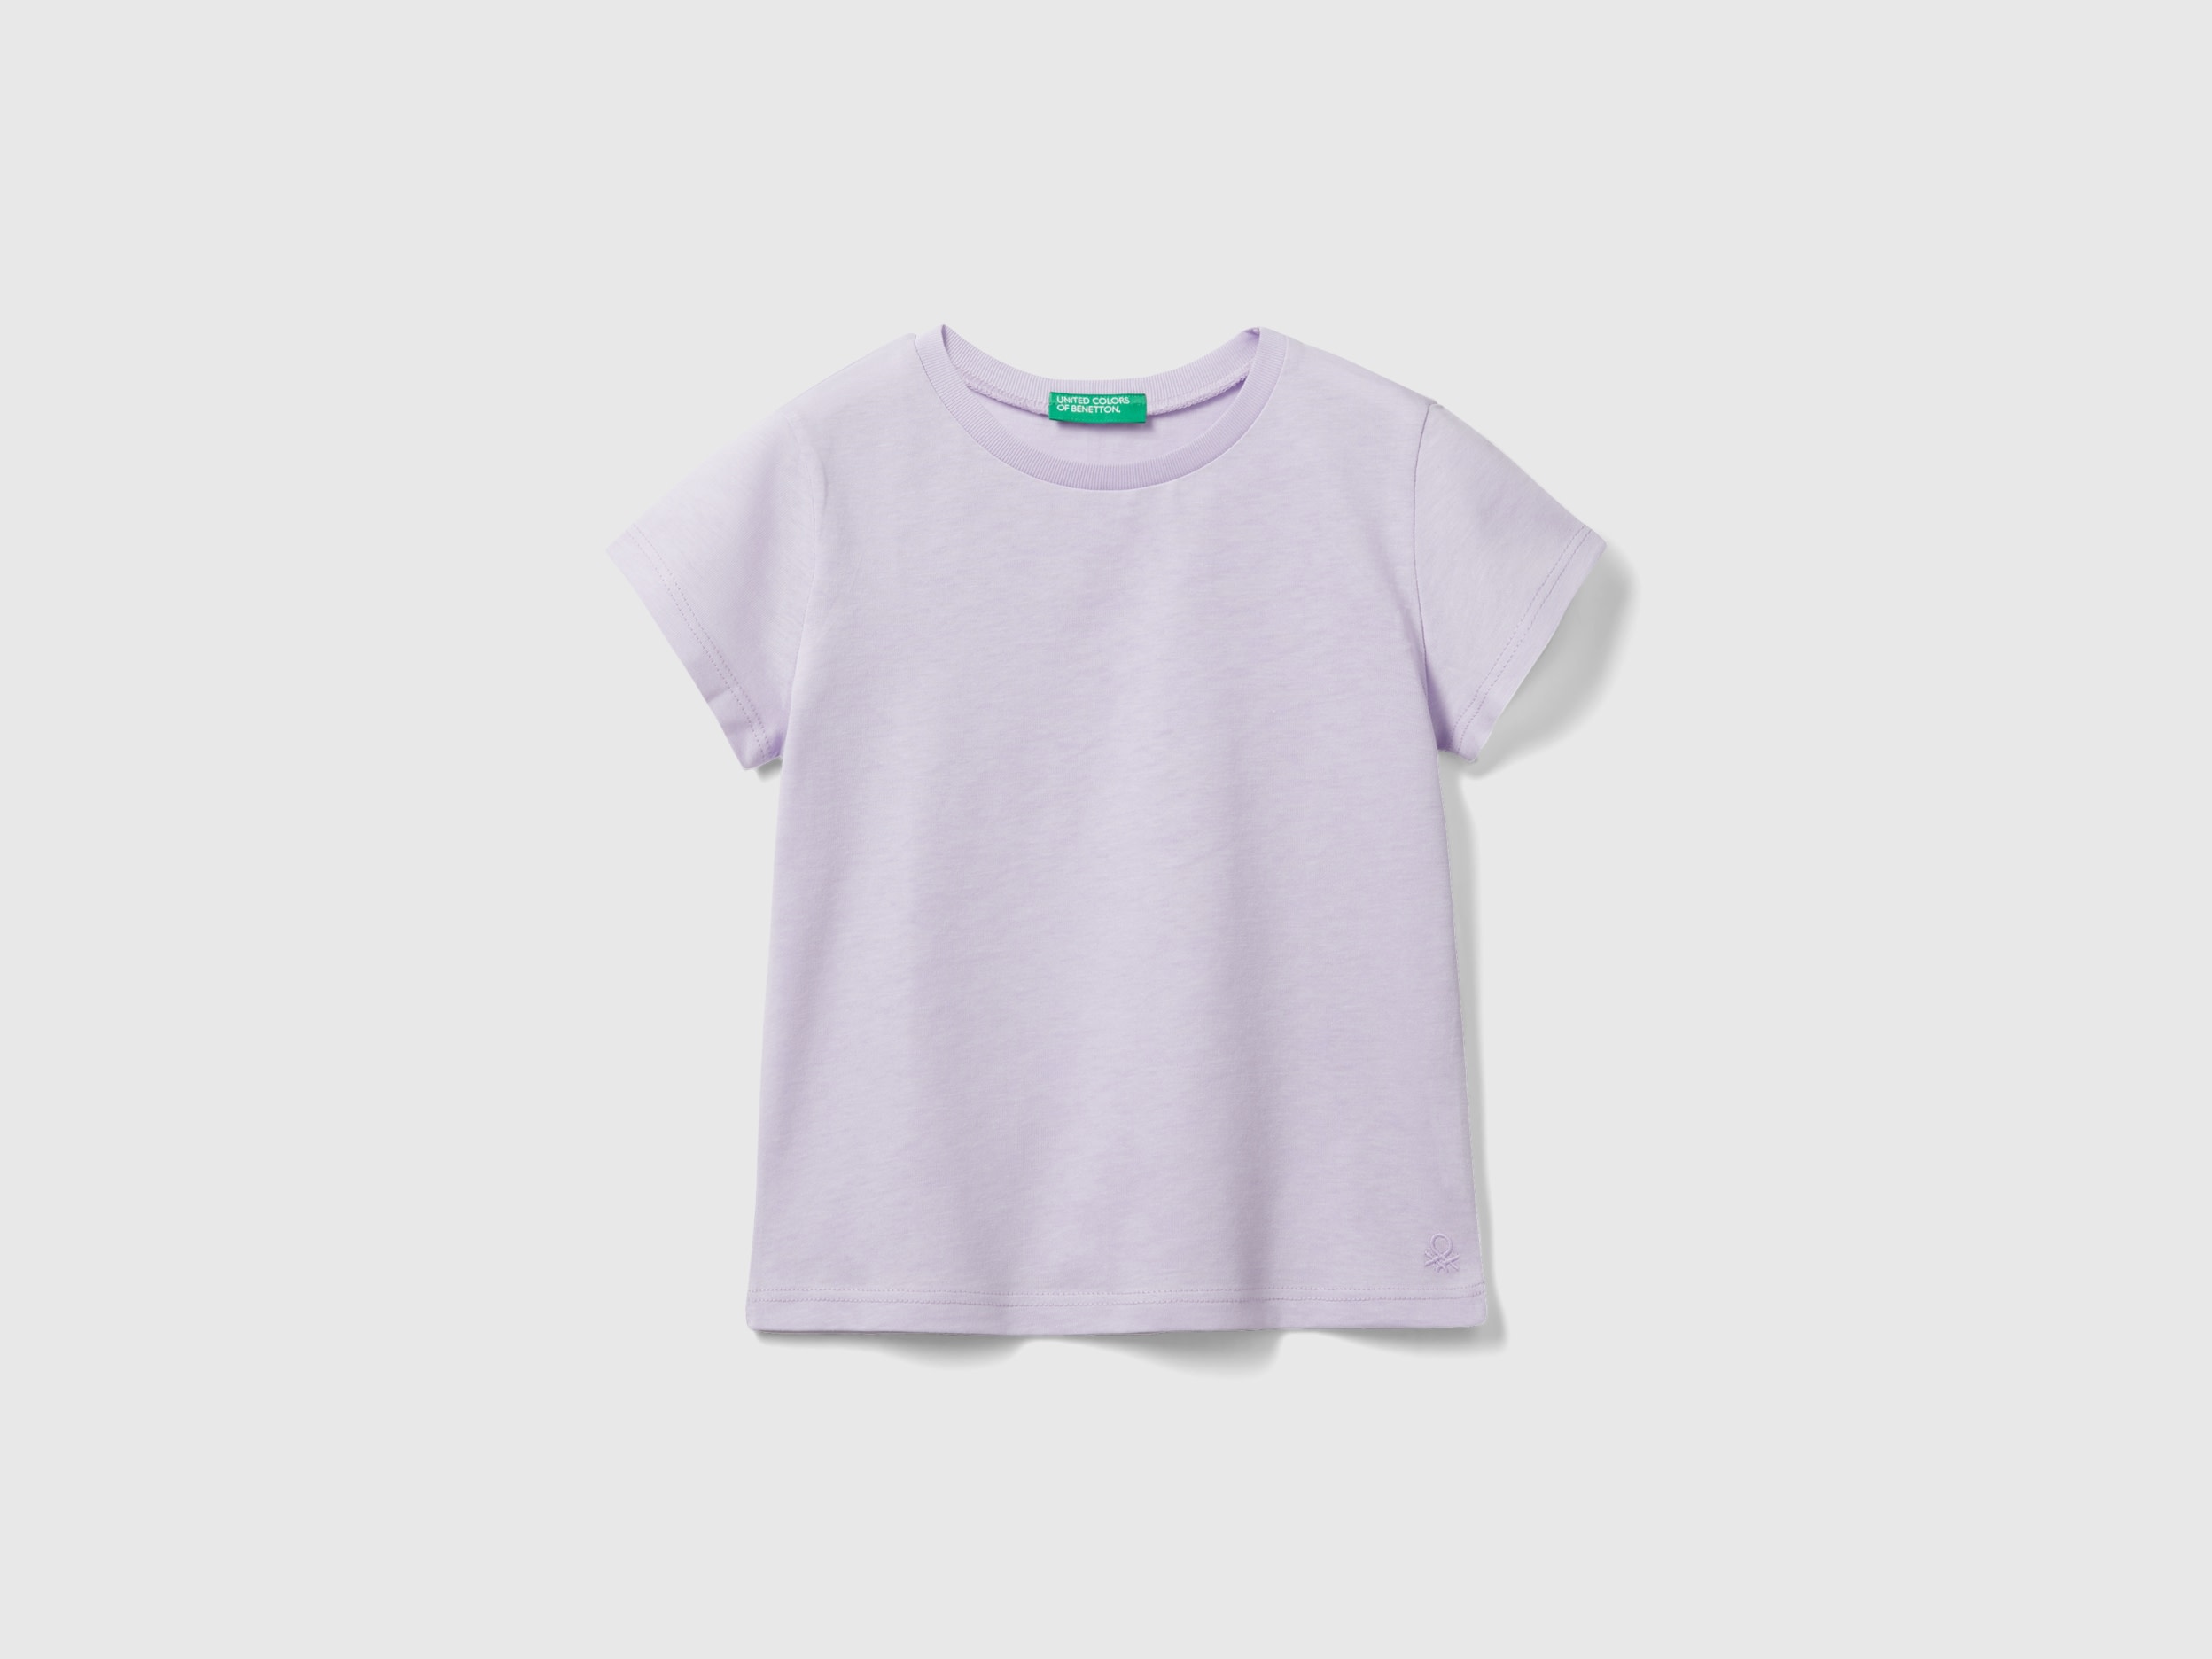 Benetton, 100% Organic Cotton T-shirt, size 12-18, Lilac, Kids